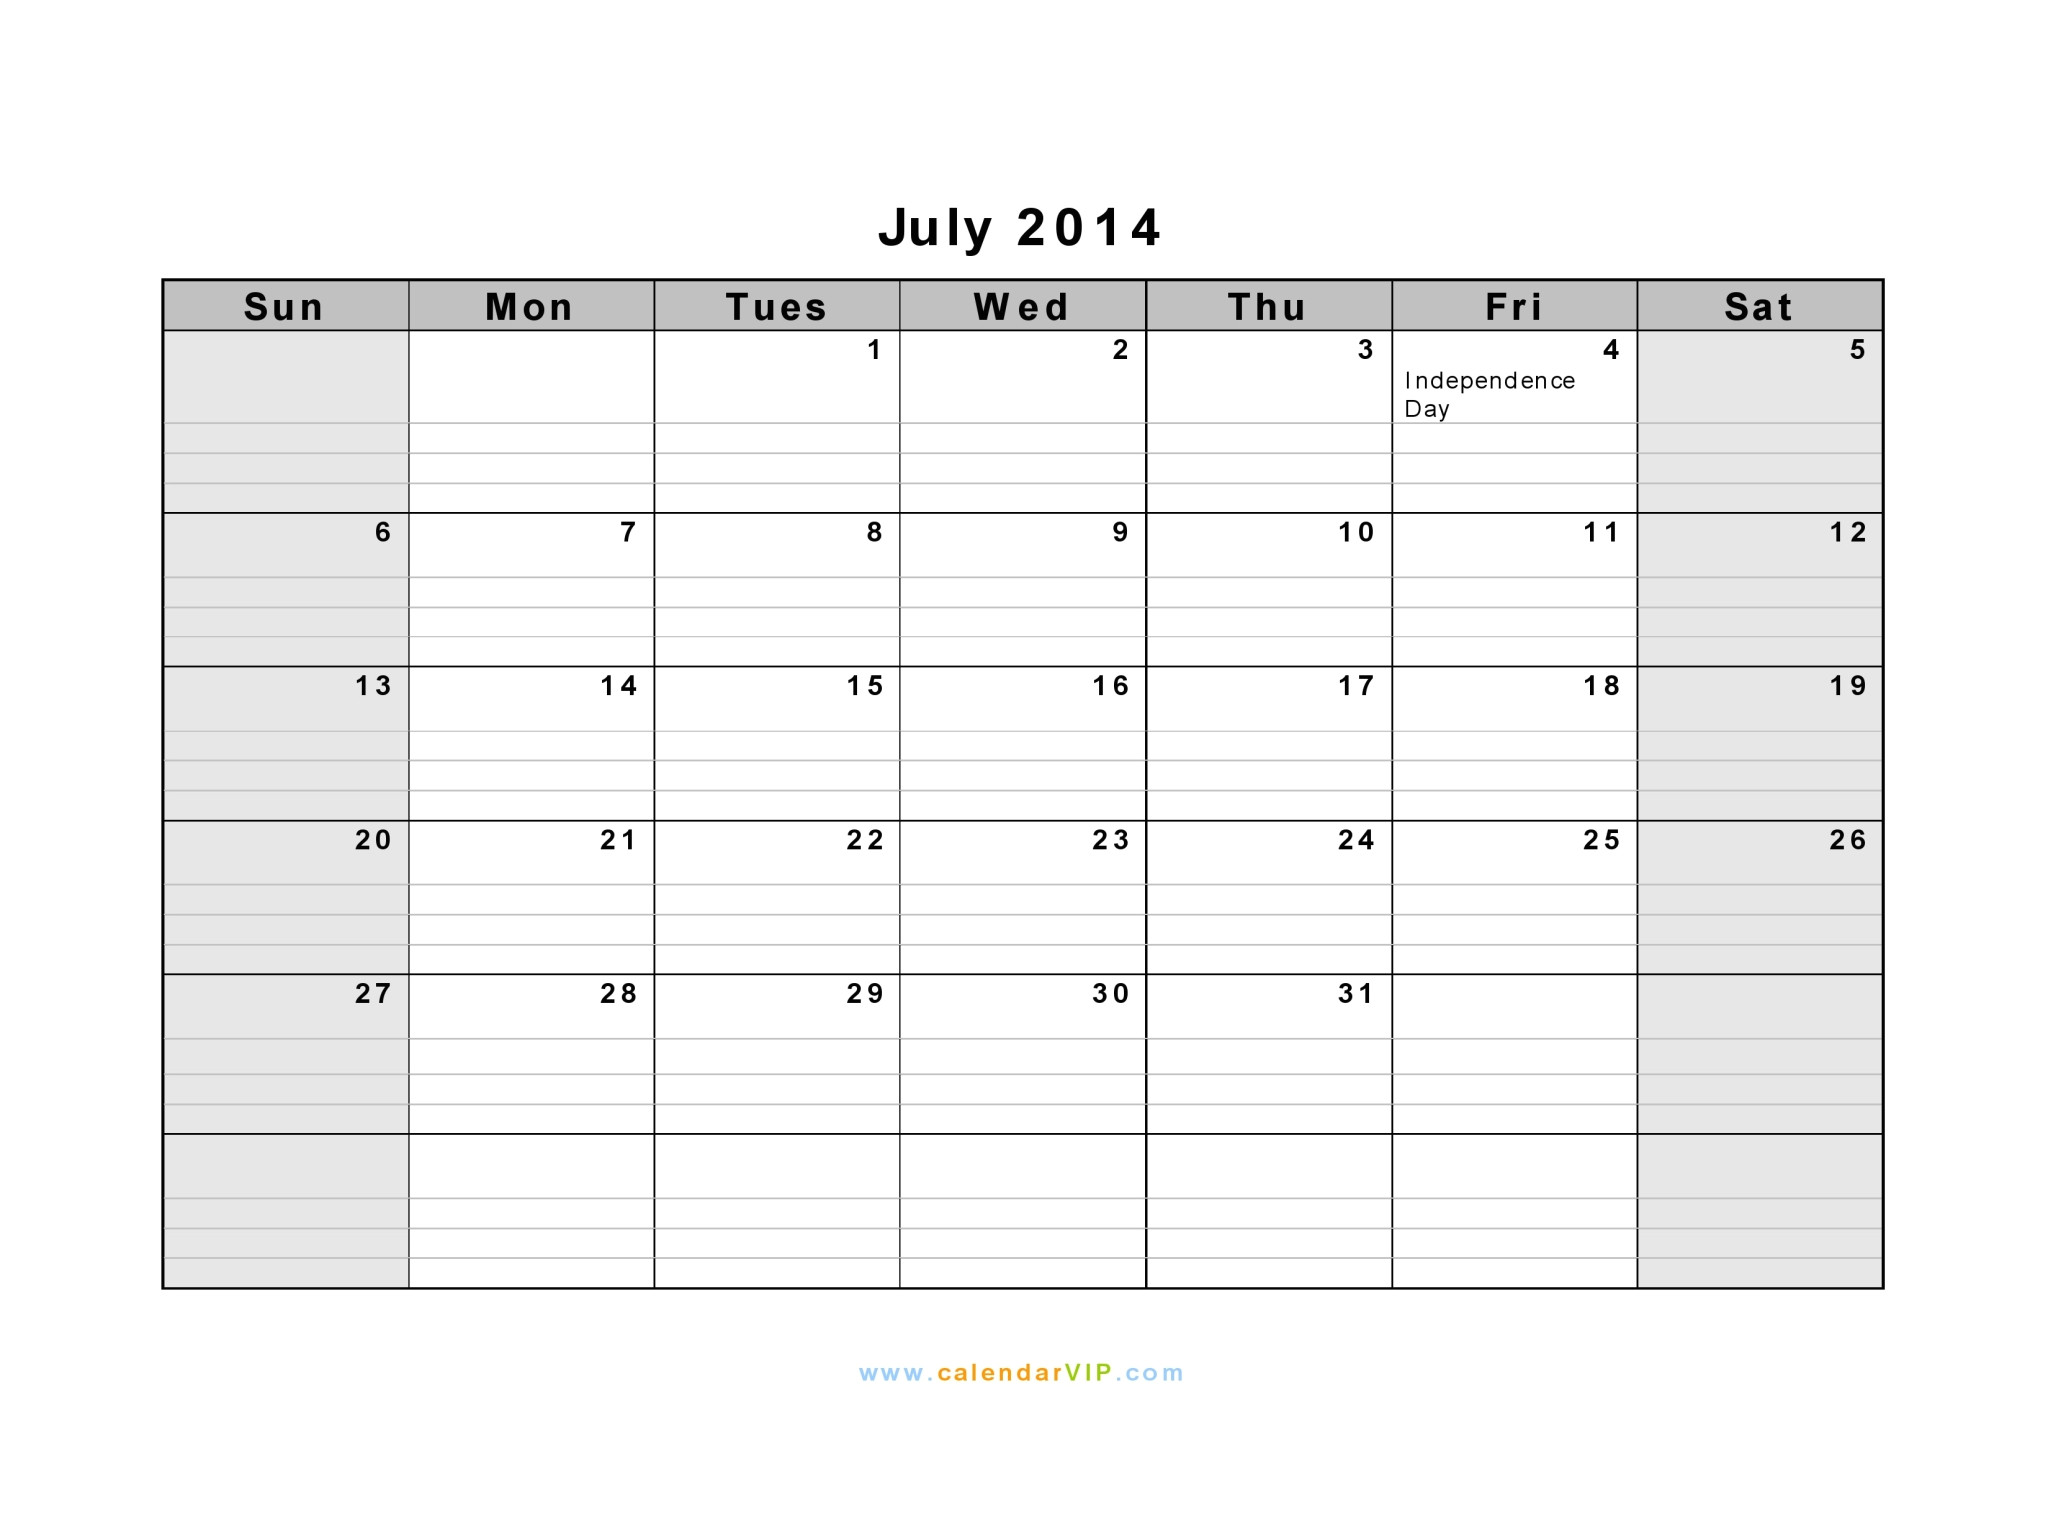 Customizable Calendar Template 2014 Best Of Free Customizable Printable Calendar Downloadtarget